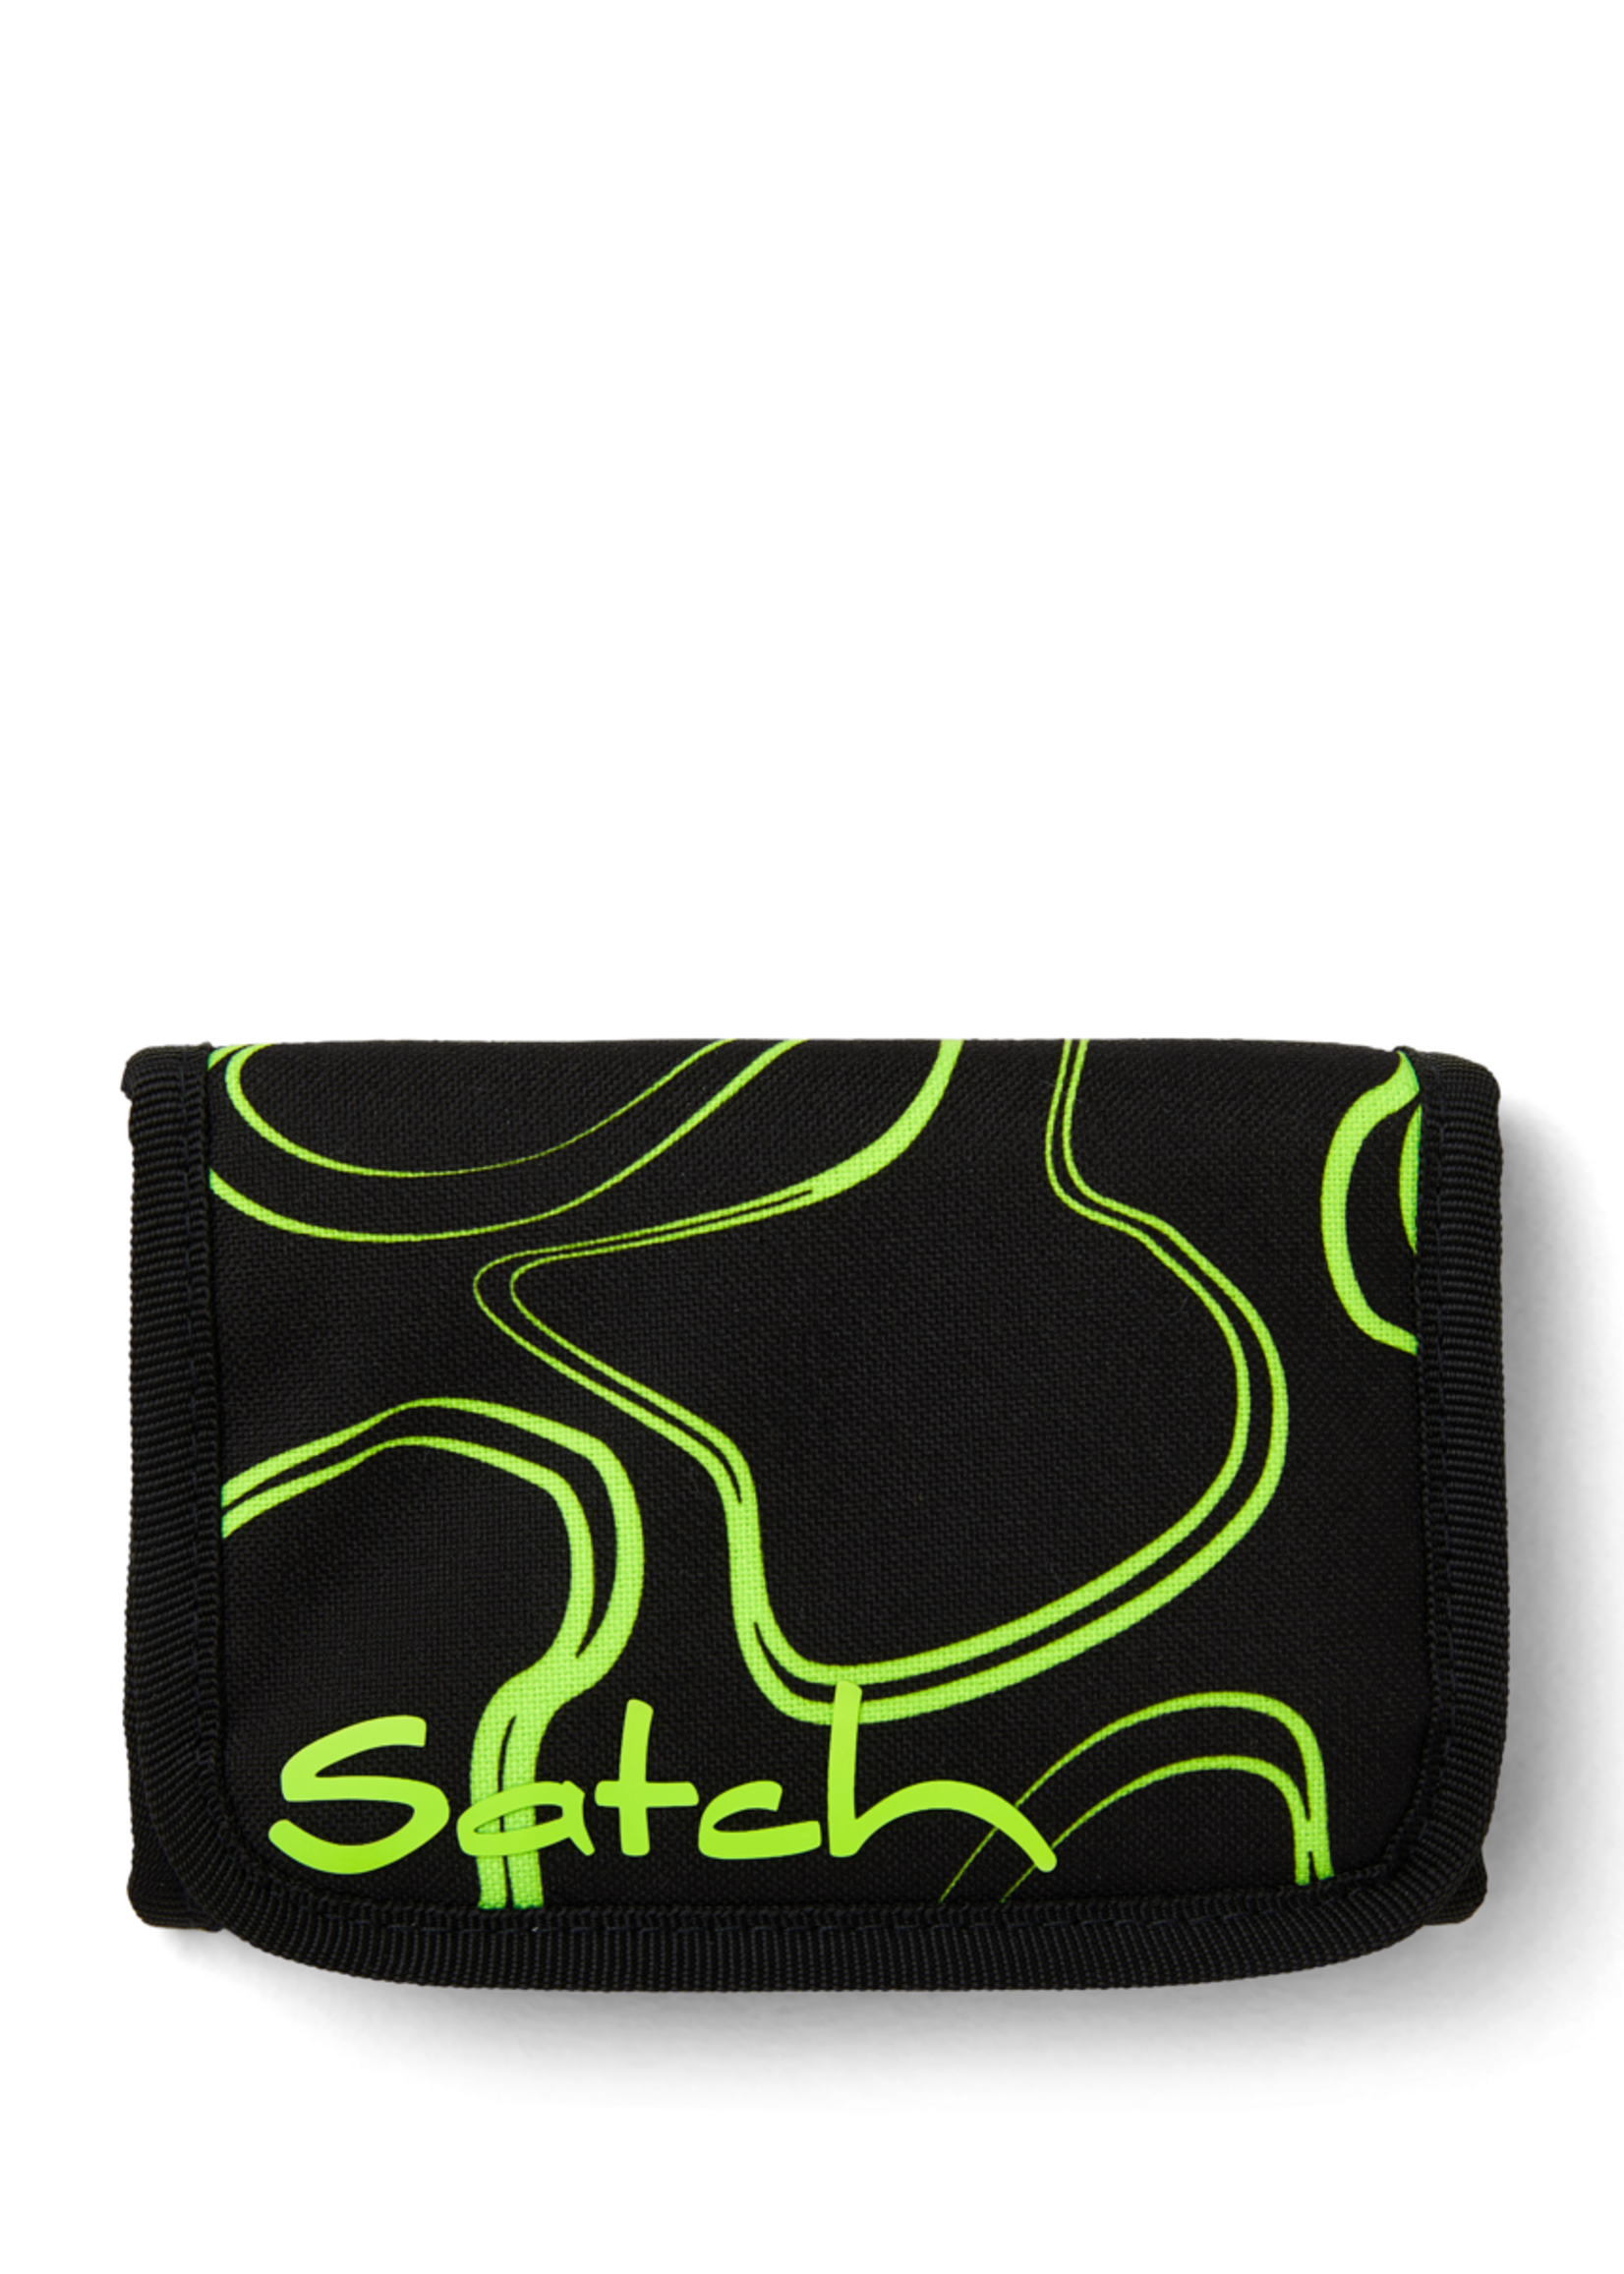 SATCH satch Wallet green supreme